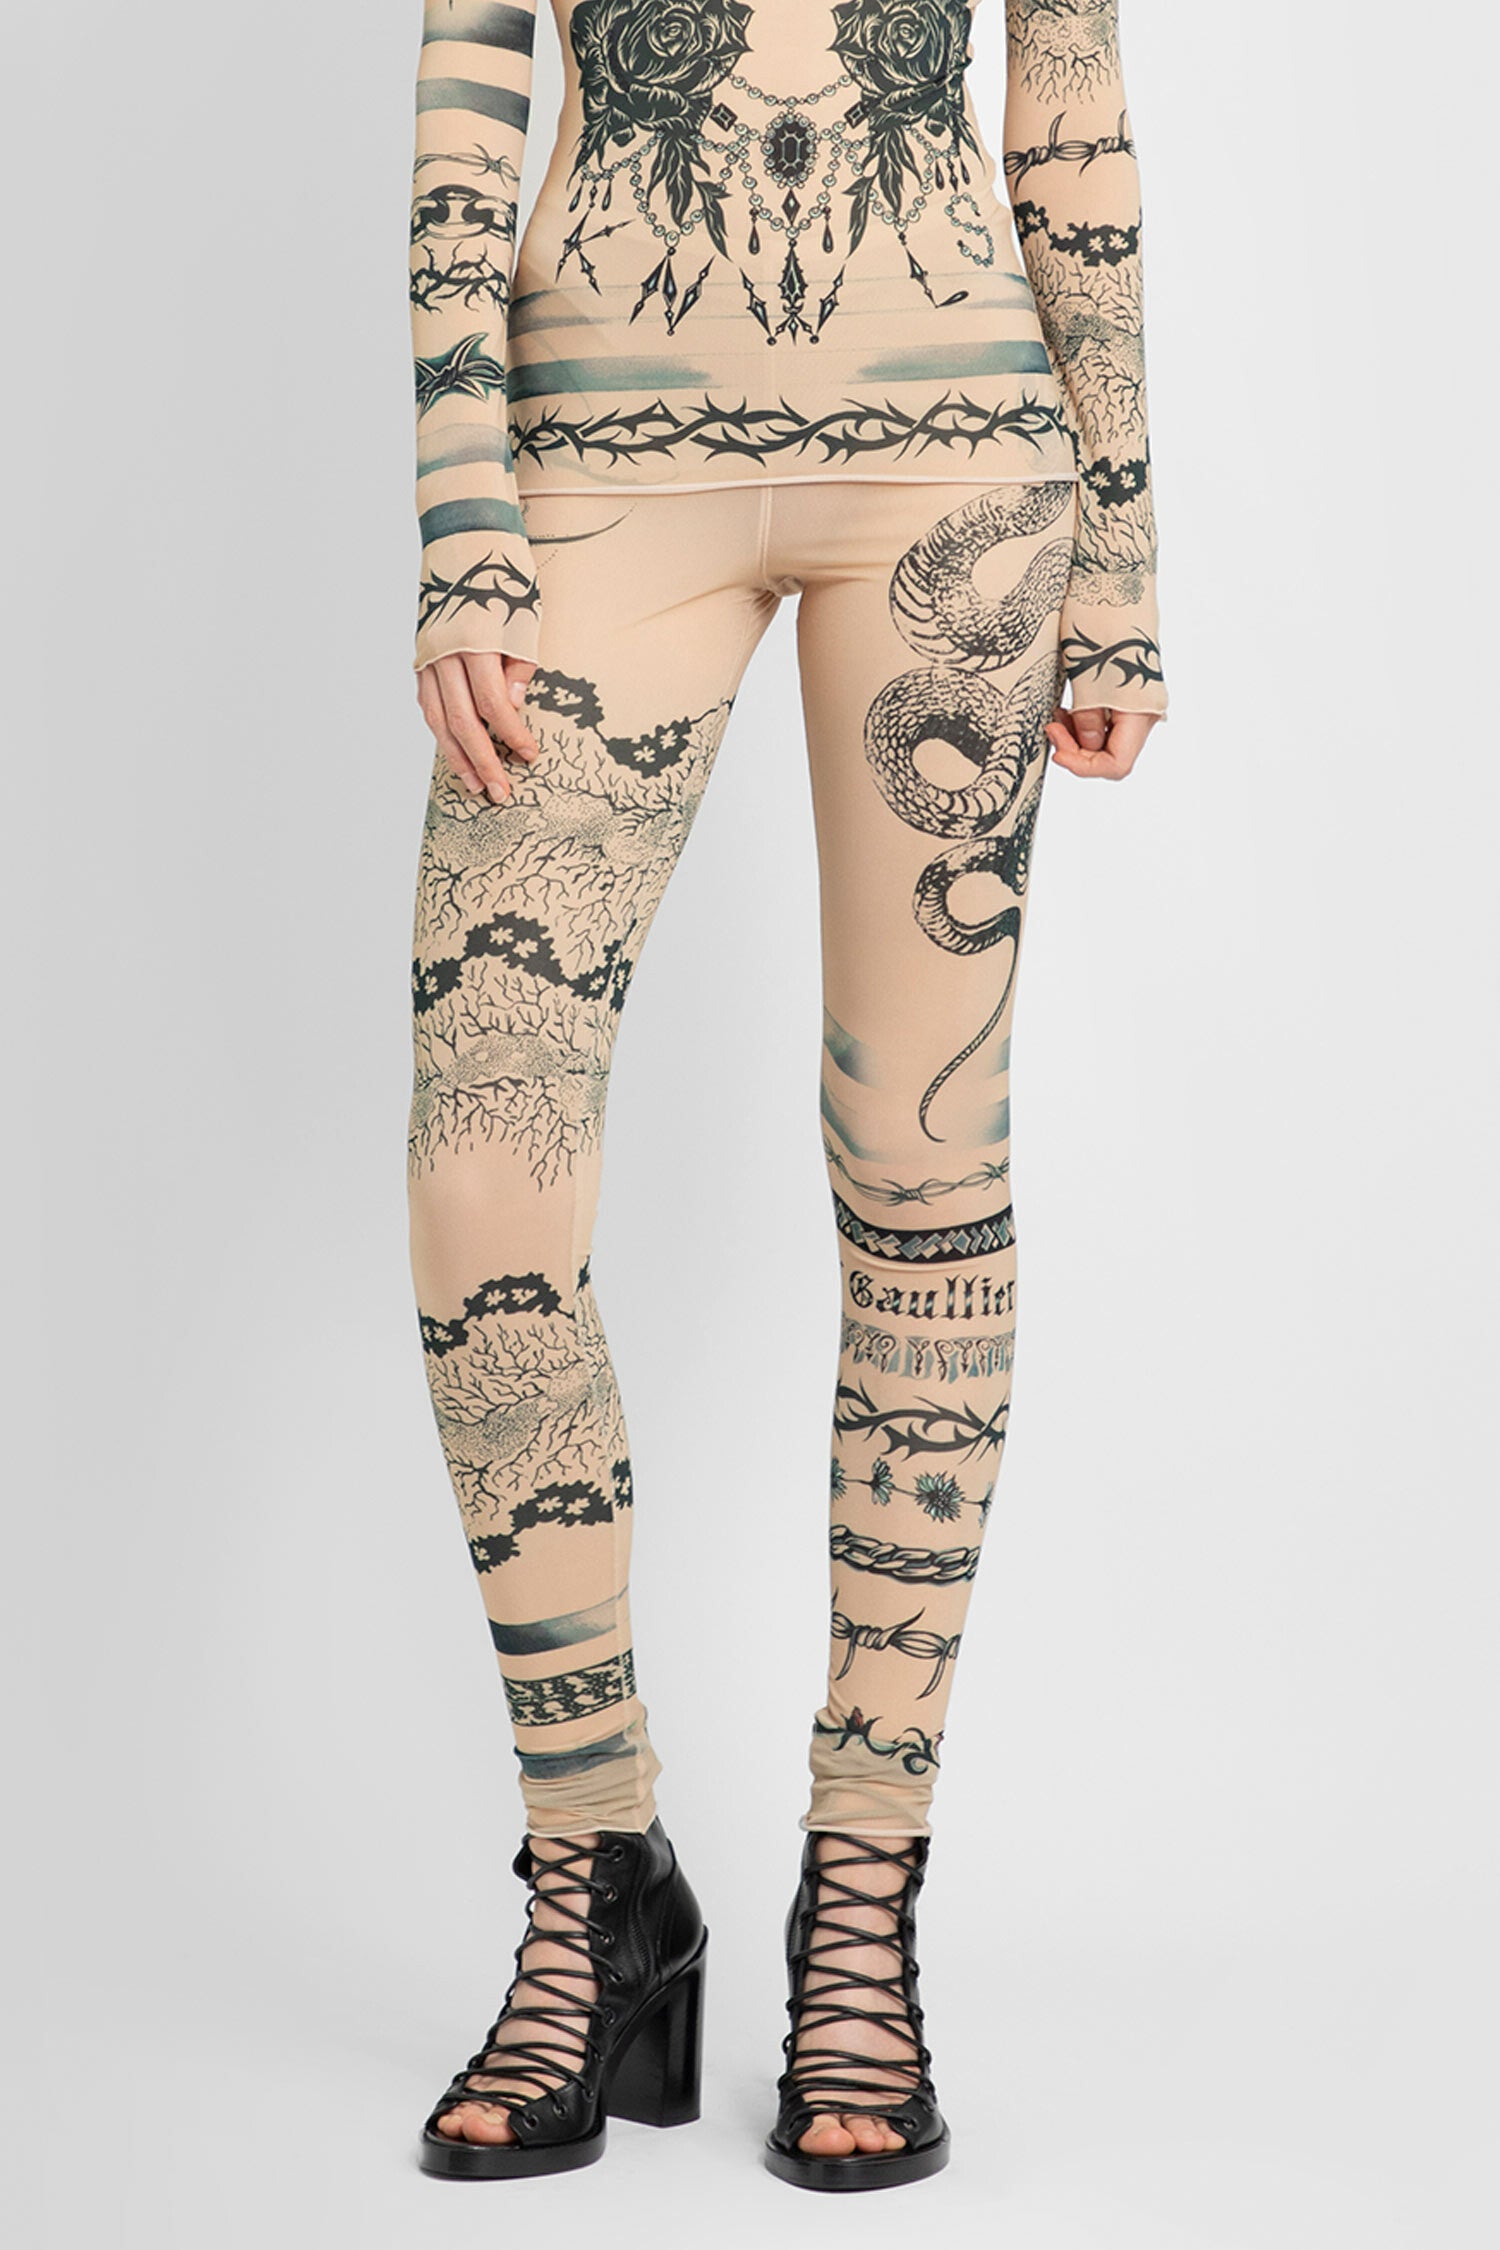 Jean Paul Gaultier X KNWLS Leggings Printed Trompe l'oeil Tattoo